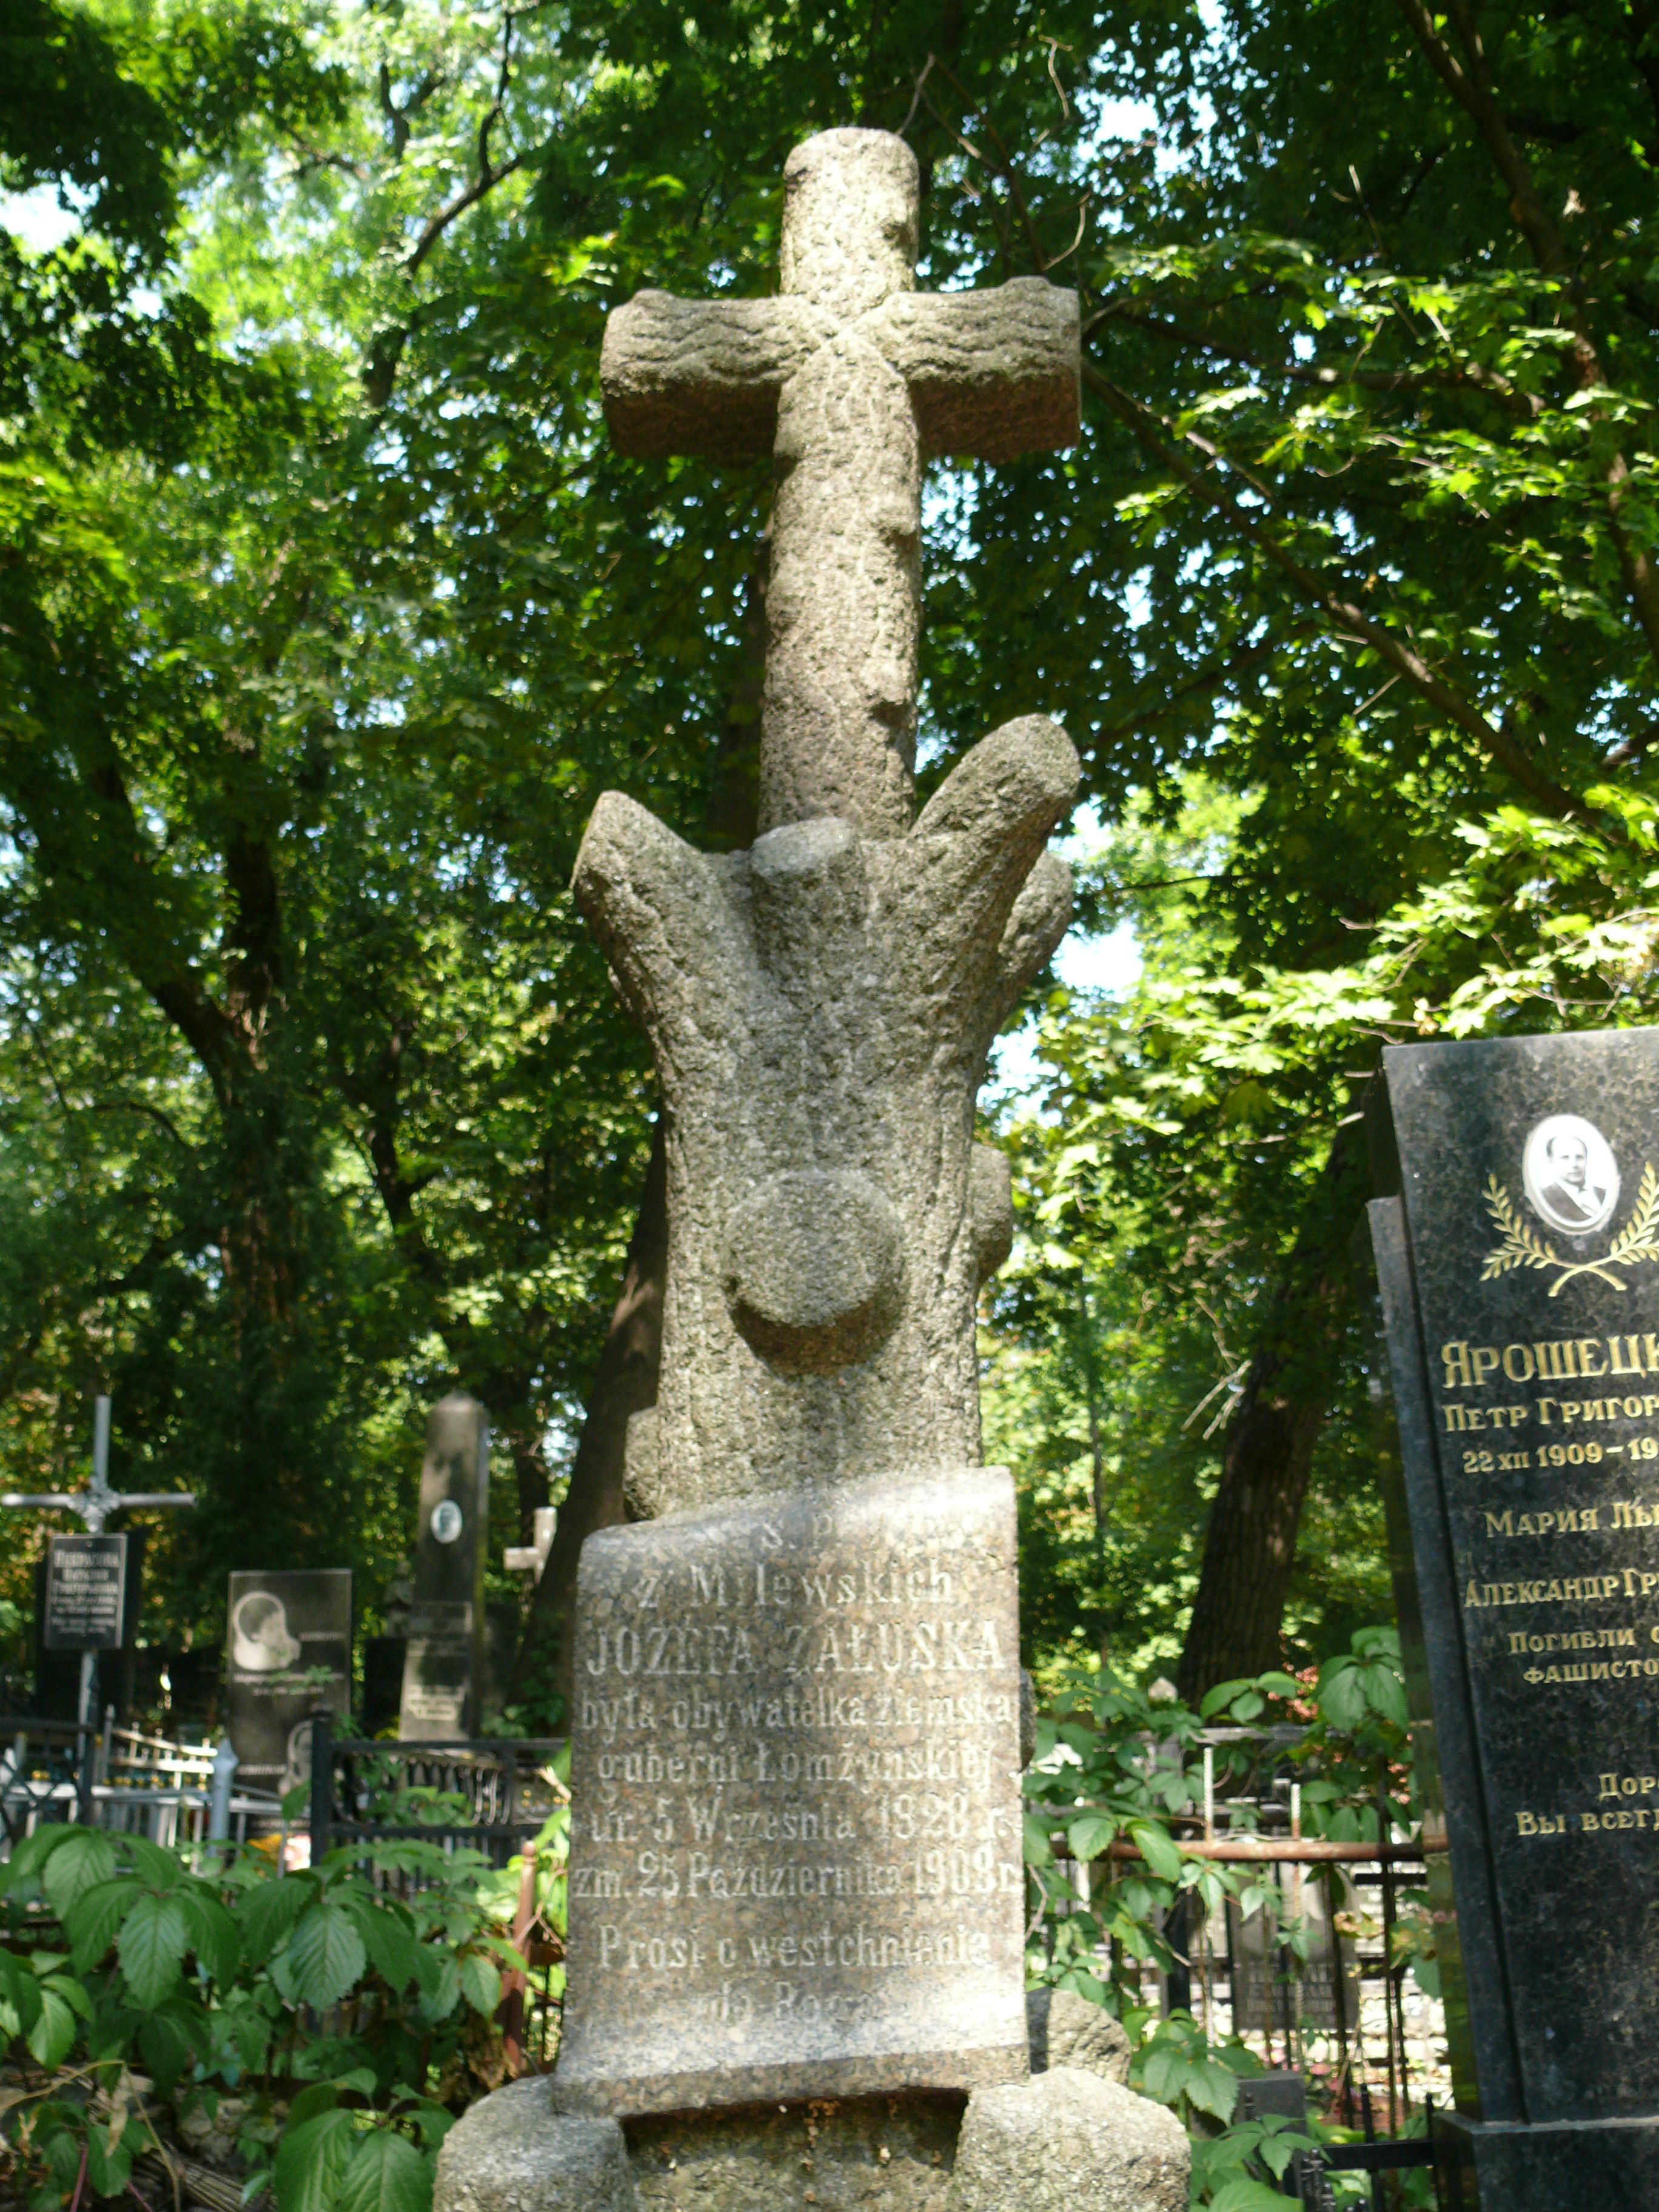 Tombstone of Józefa Załuska